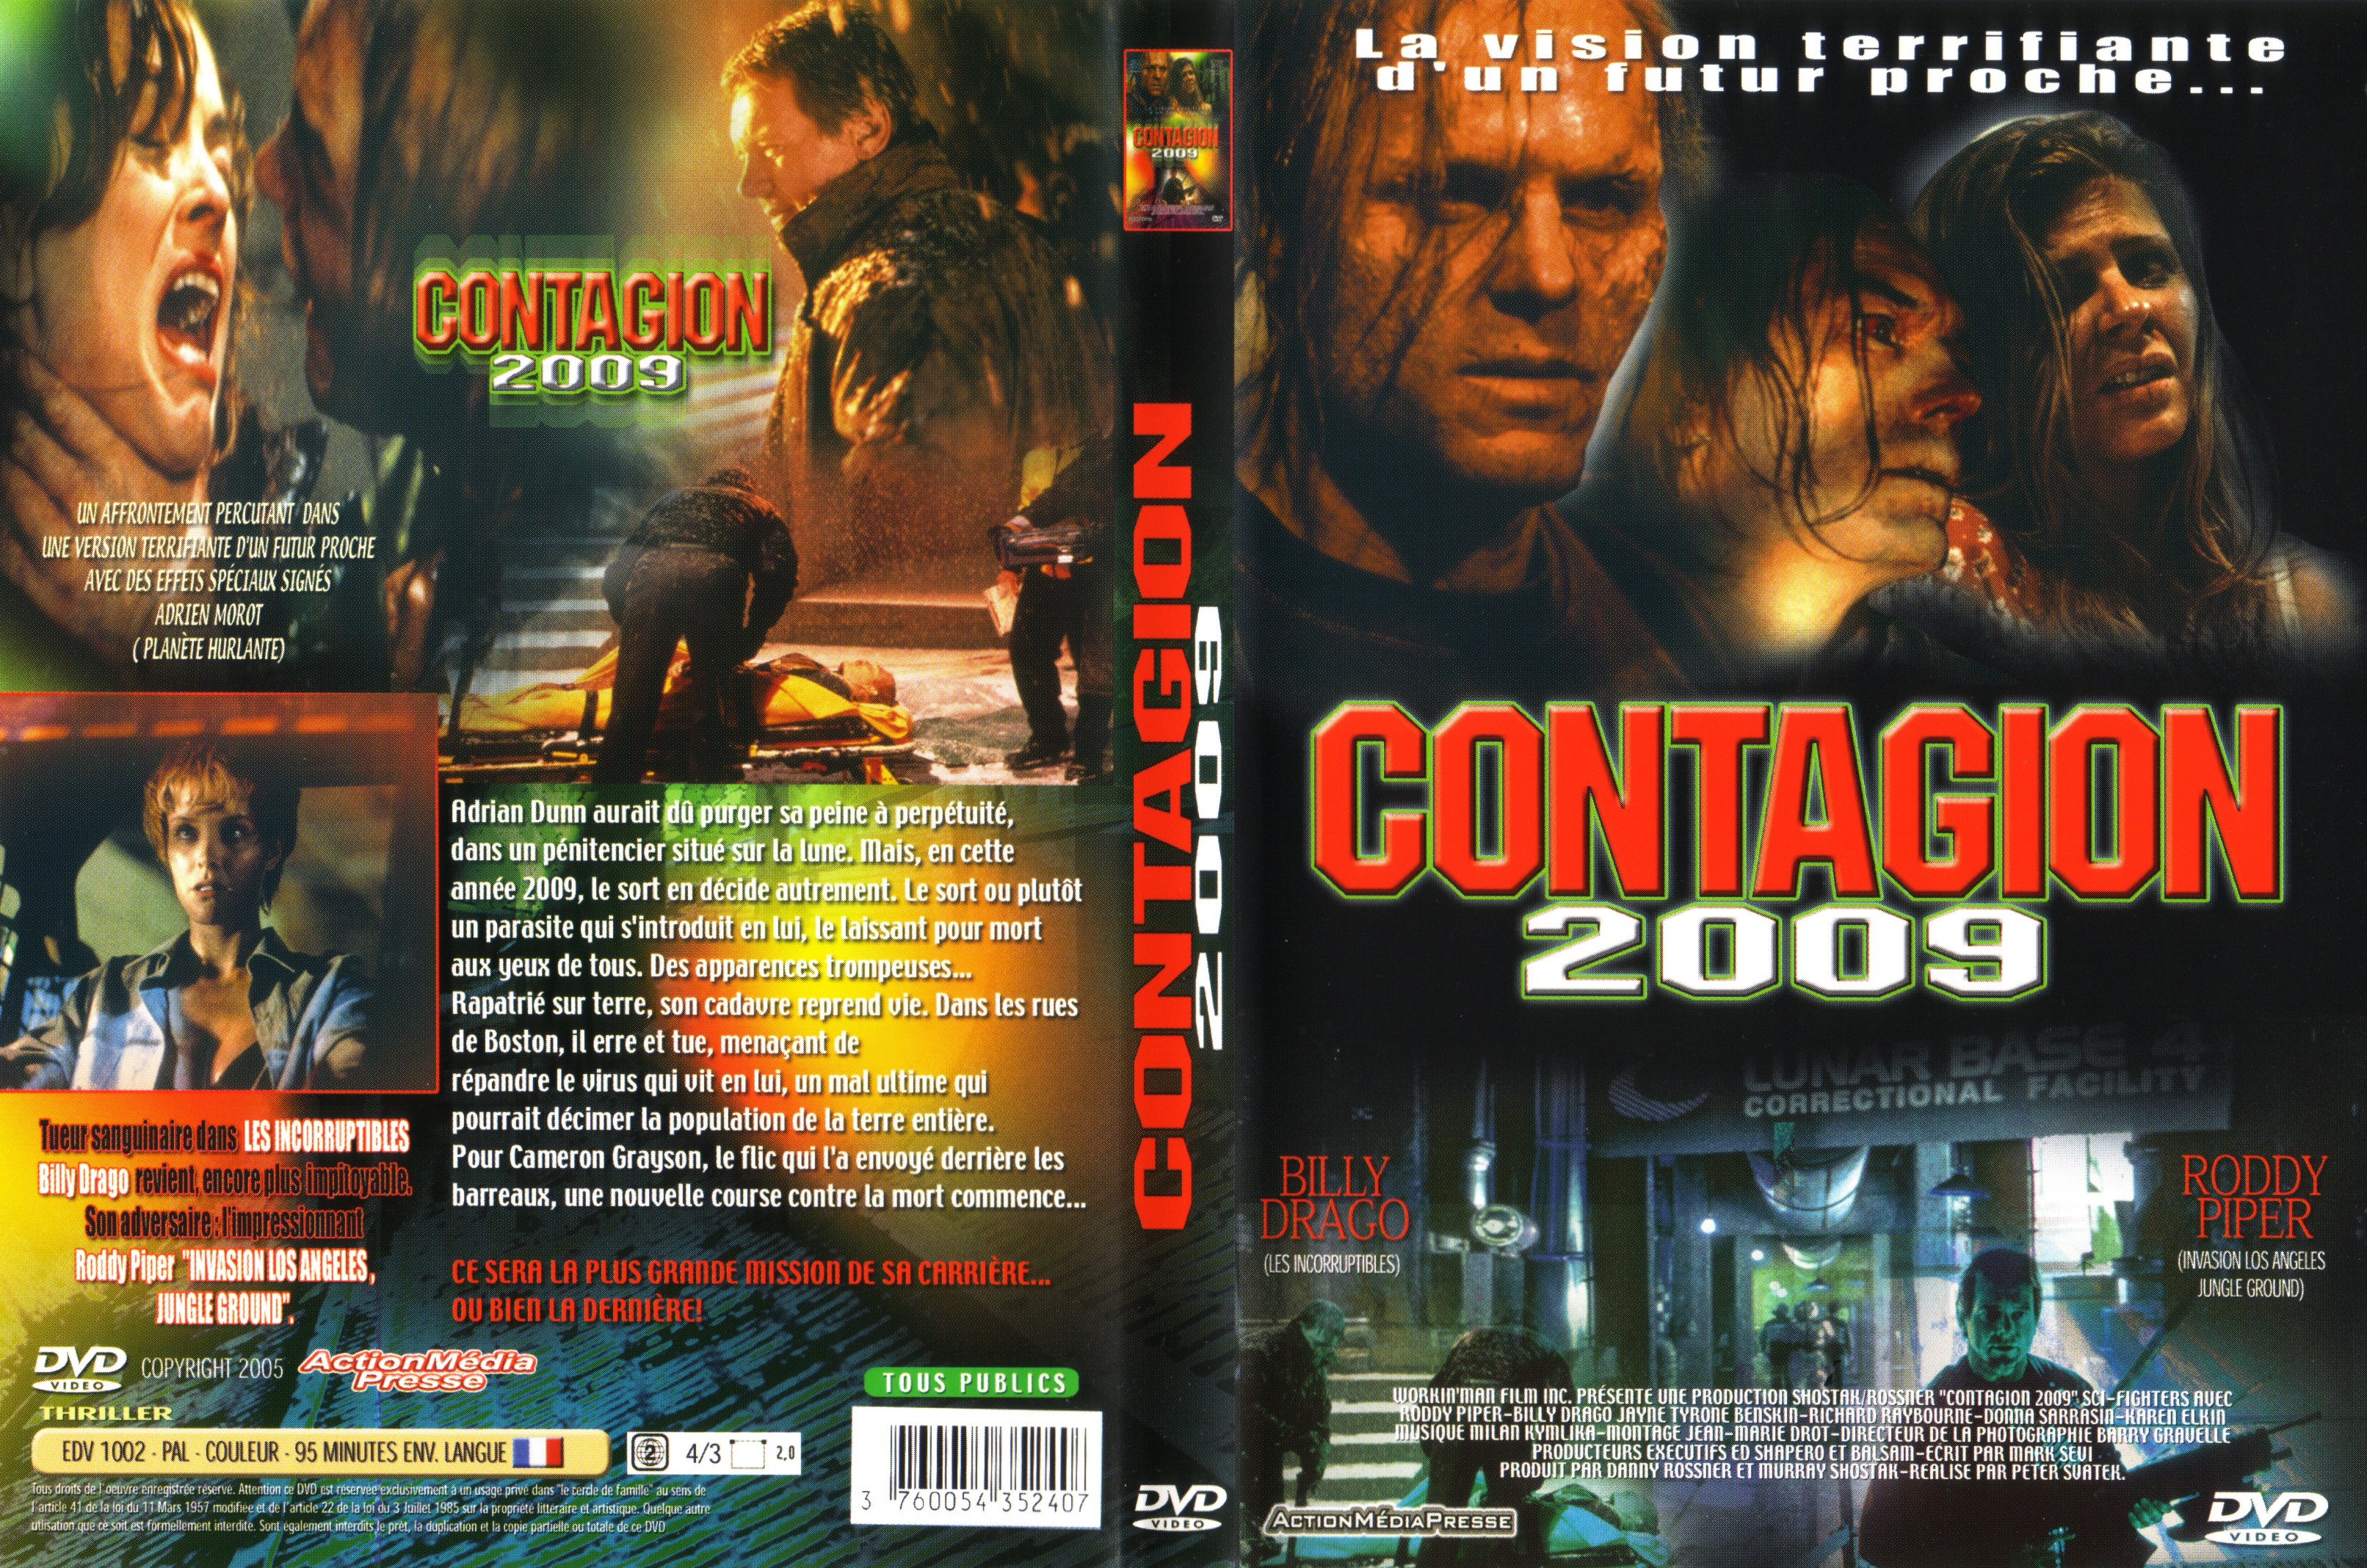 Jaquette DVD Contagion 2009 v2